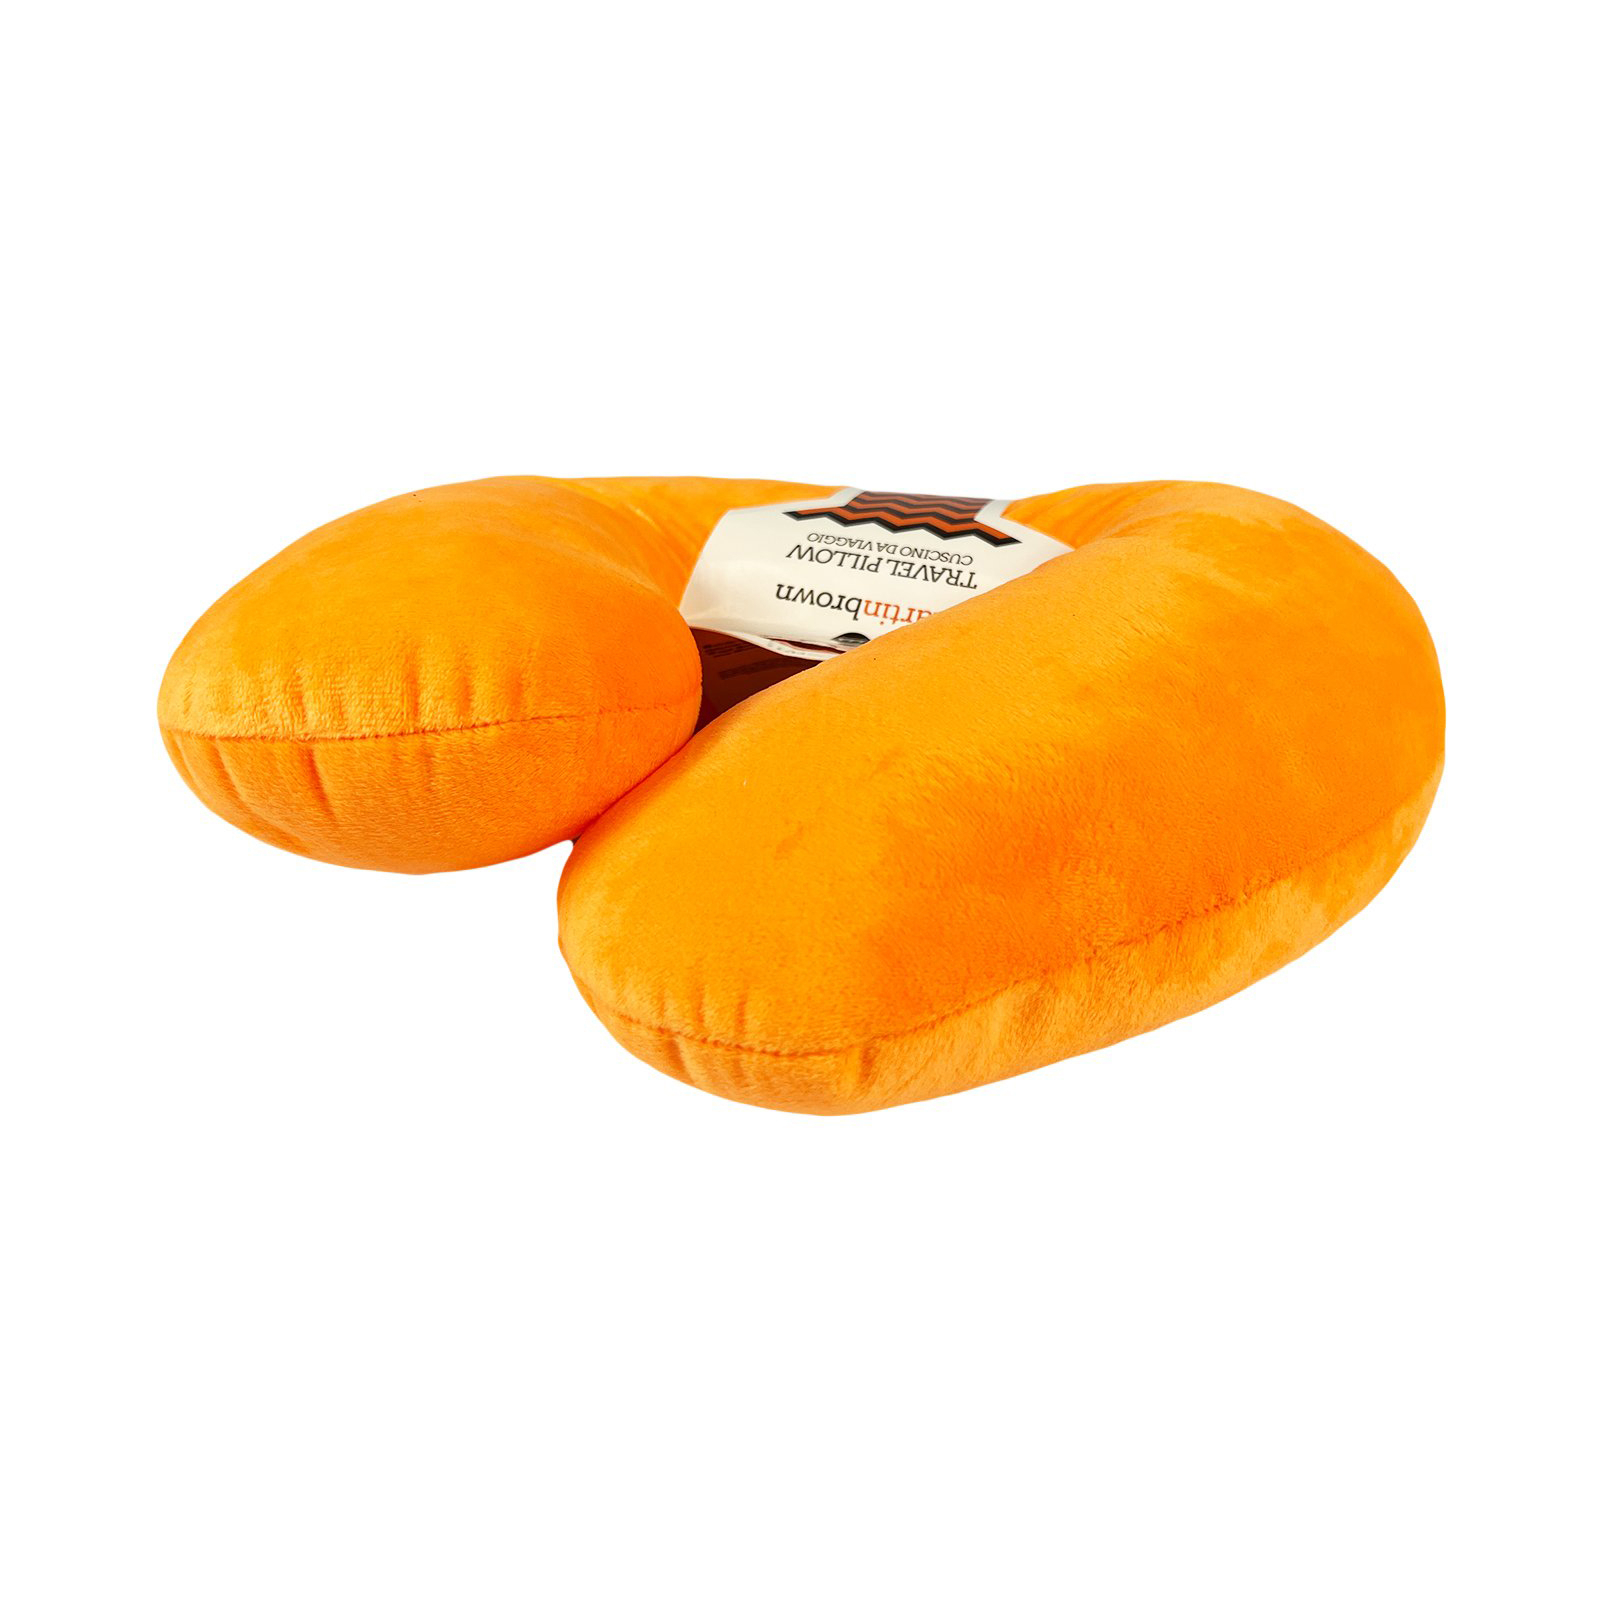 Туристическая подушка Martin Brown Travel Pillow 30х30см Orange (79003O-IS) изображение 3